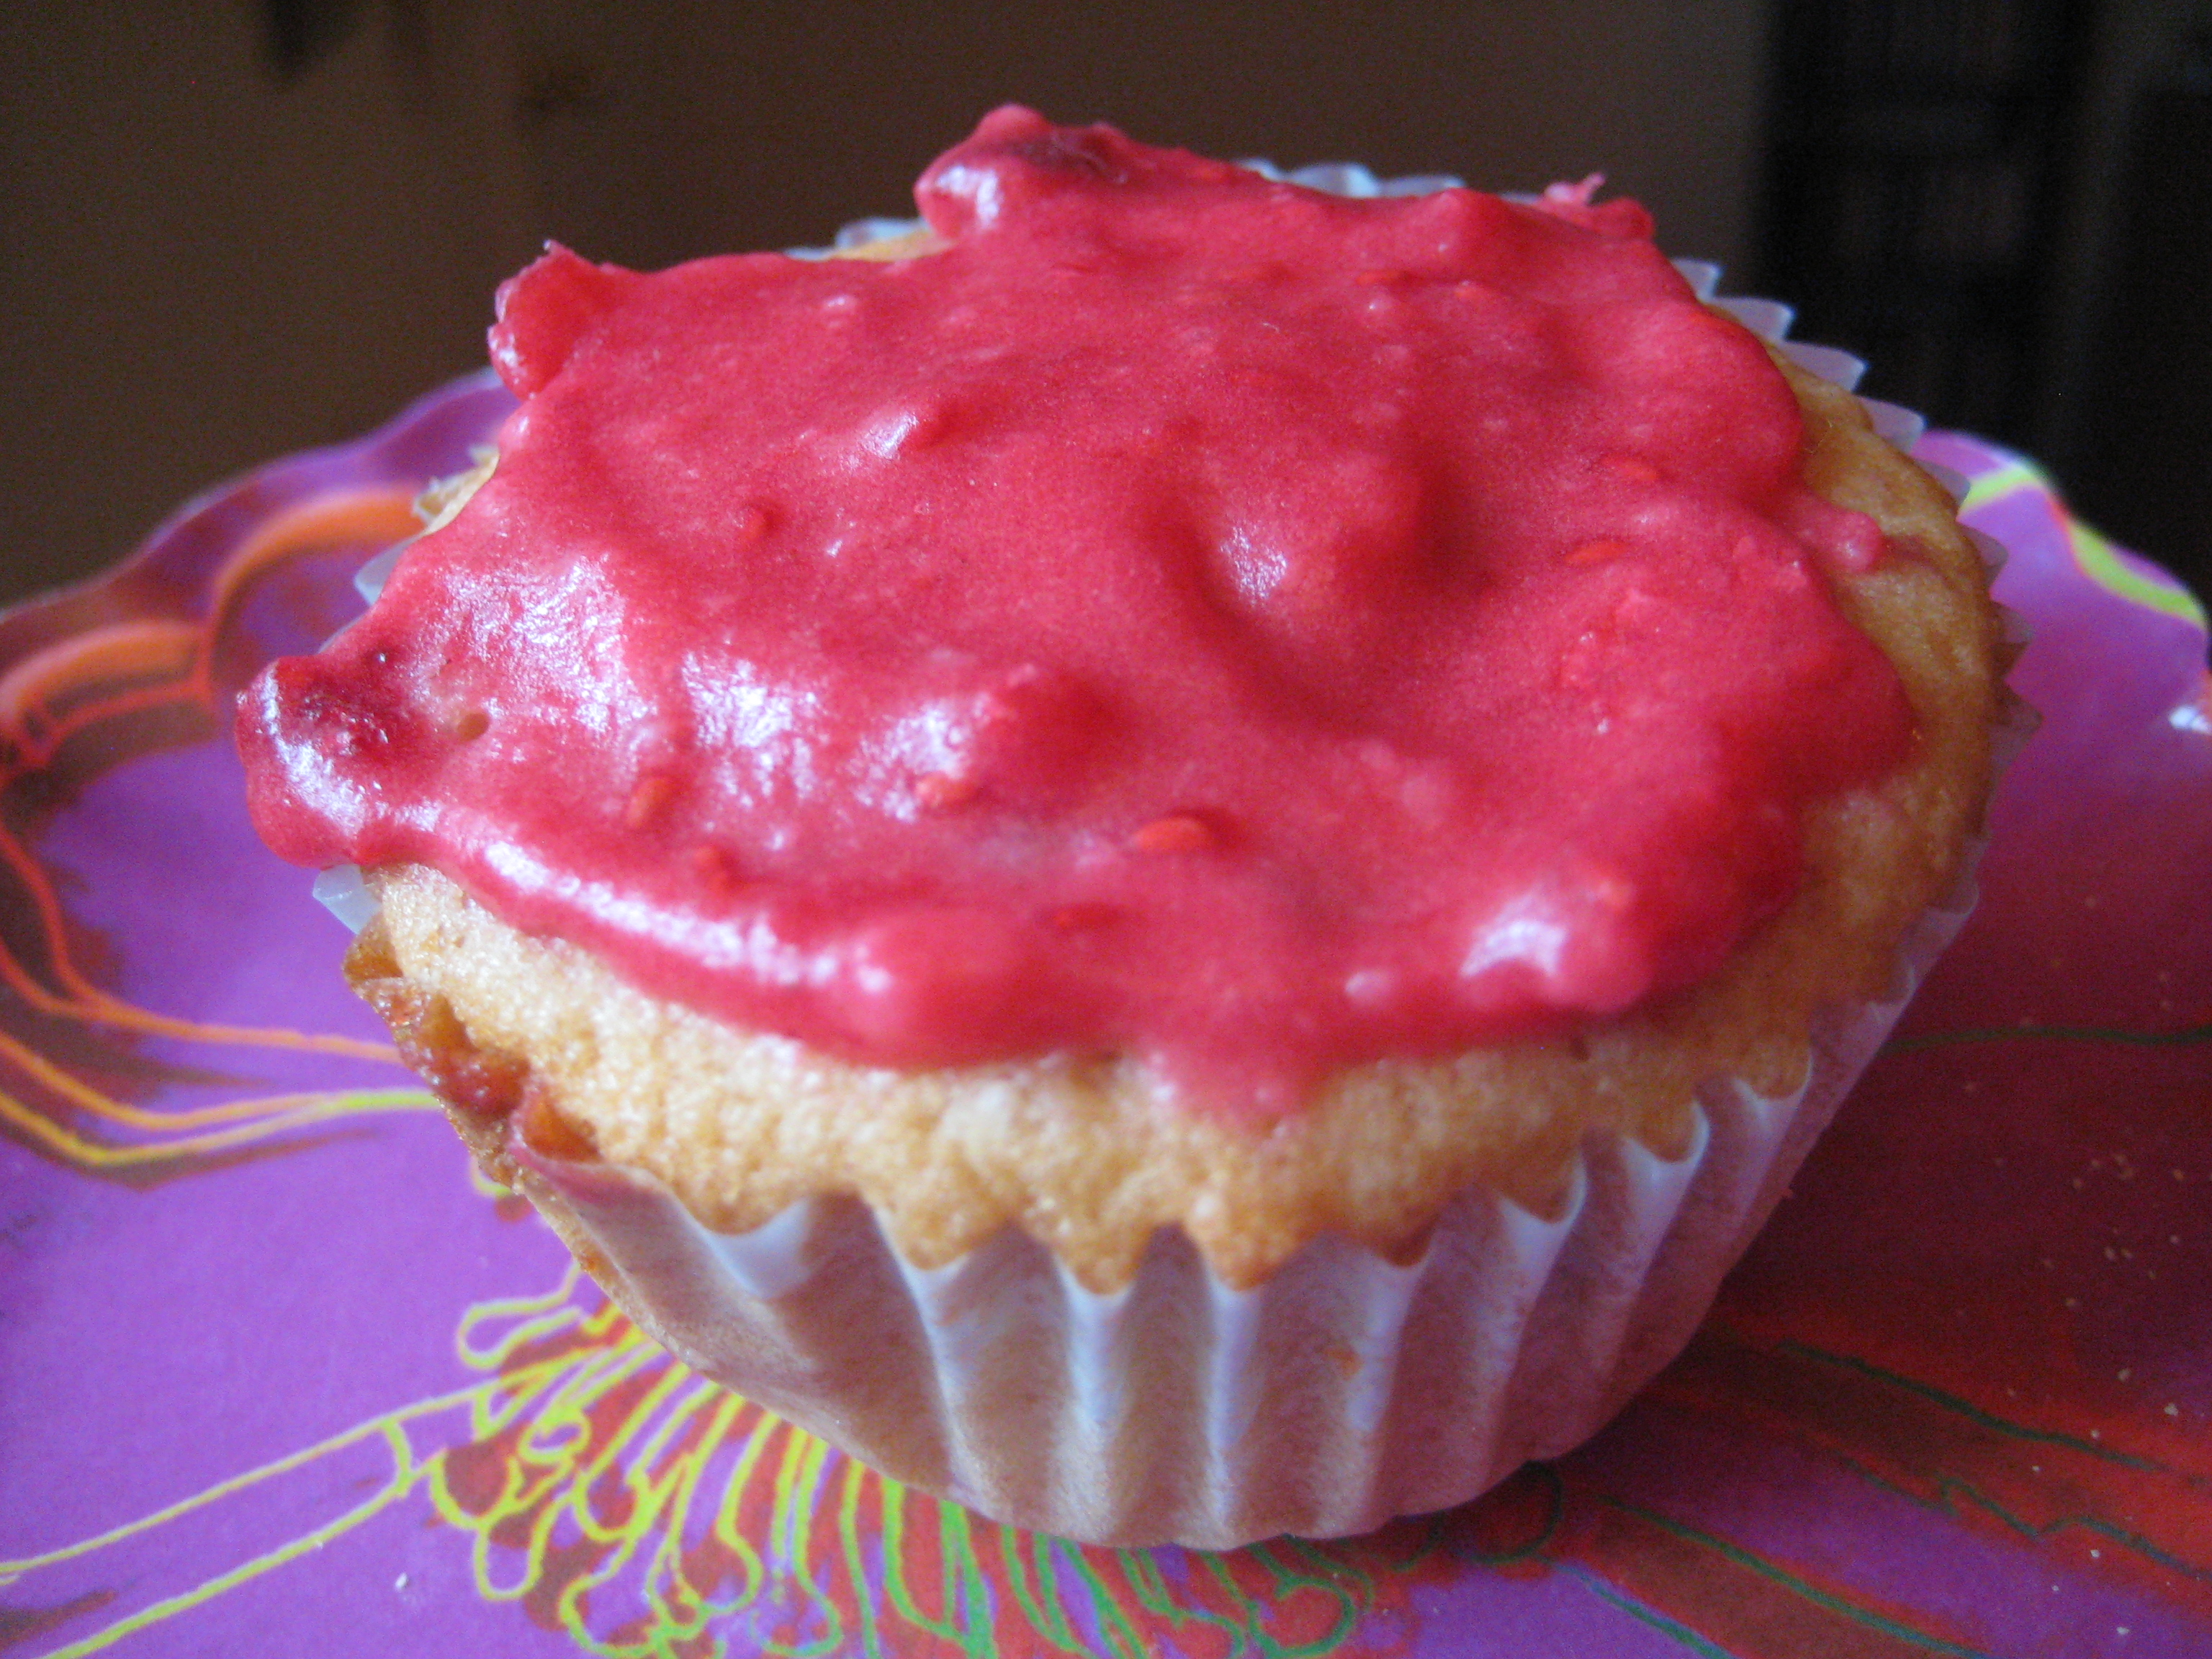 Raspberry cupcake